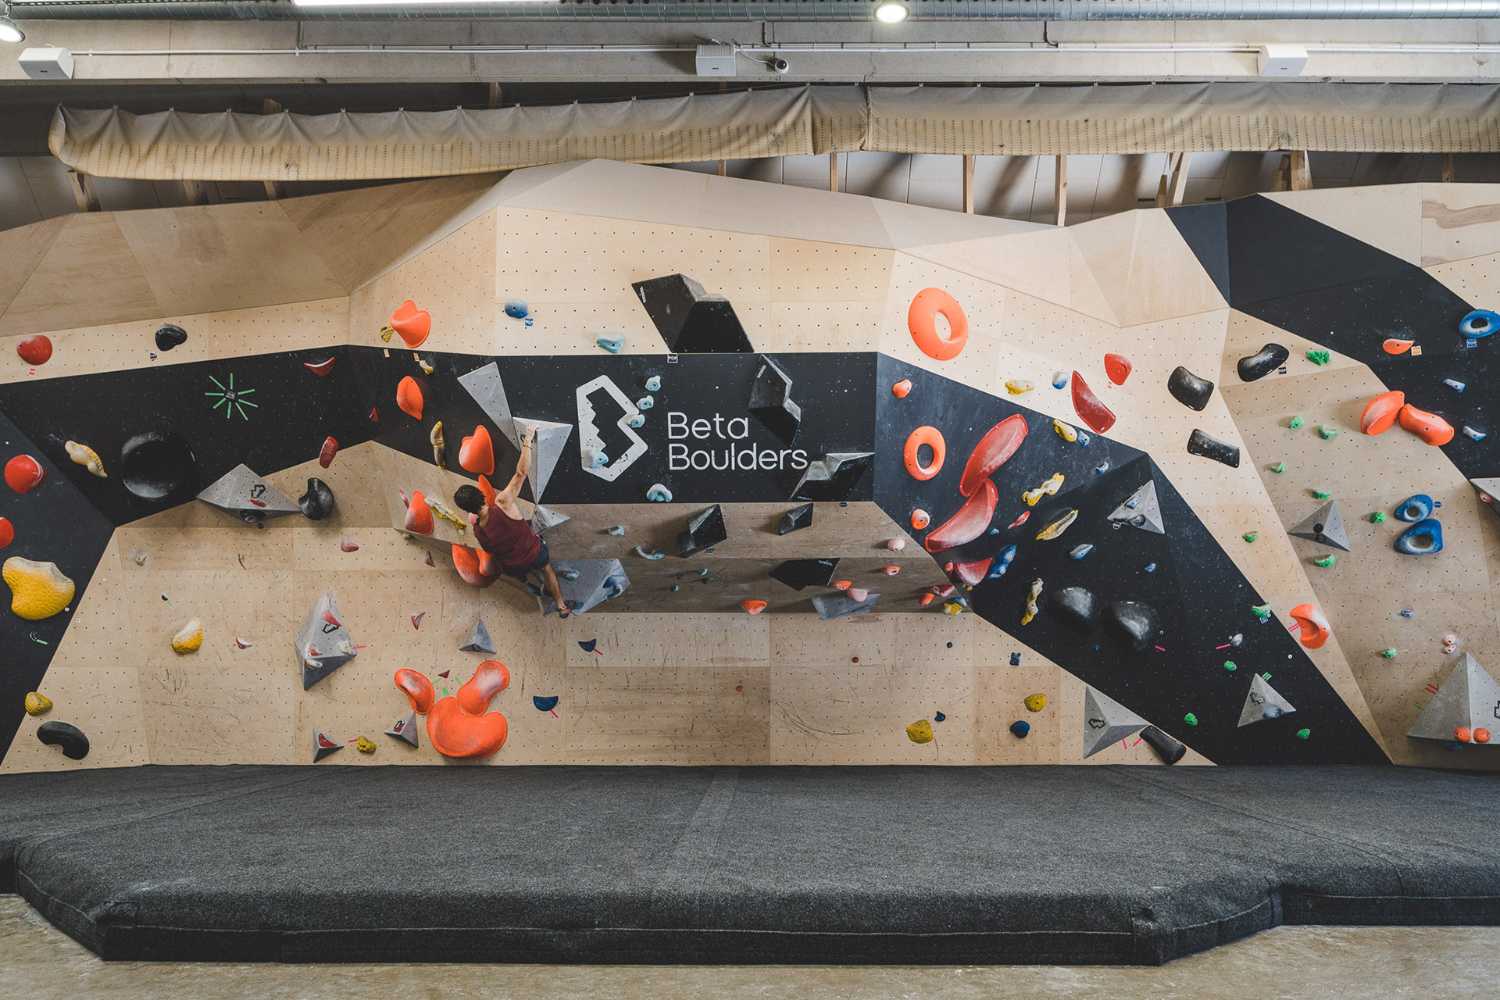 Renovating a Copenhagen gym with the Beta Boulders concept